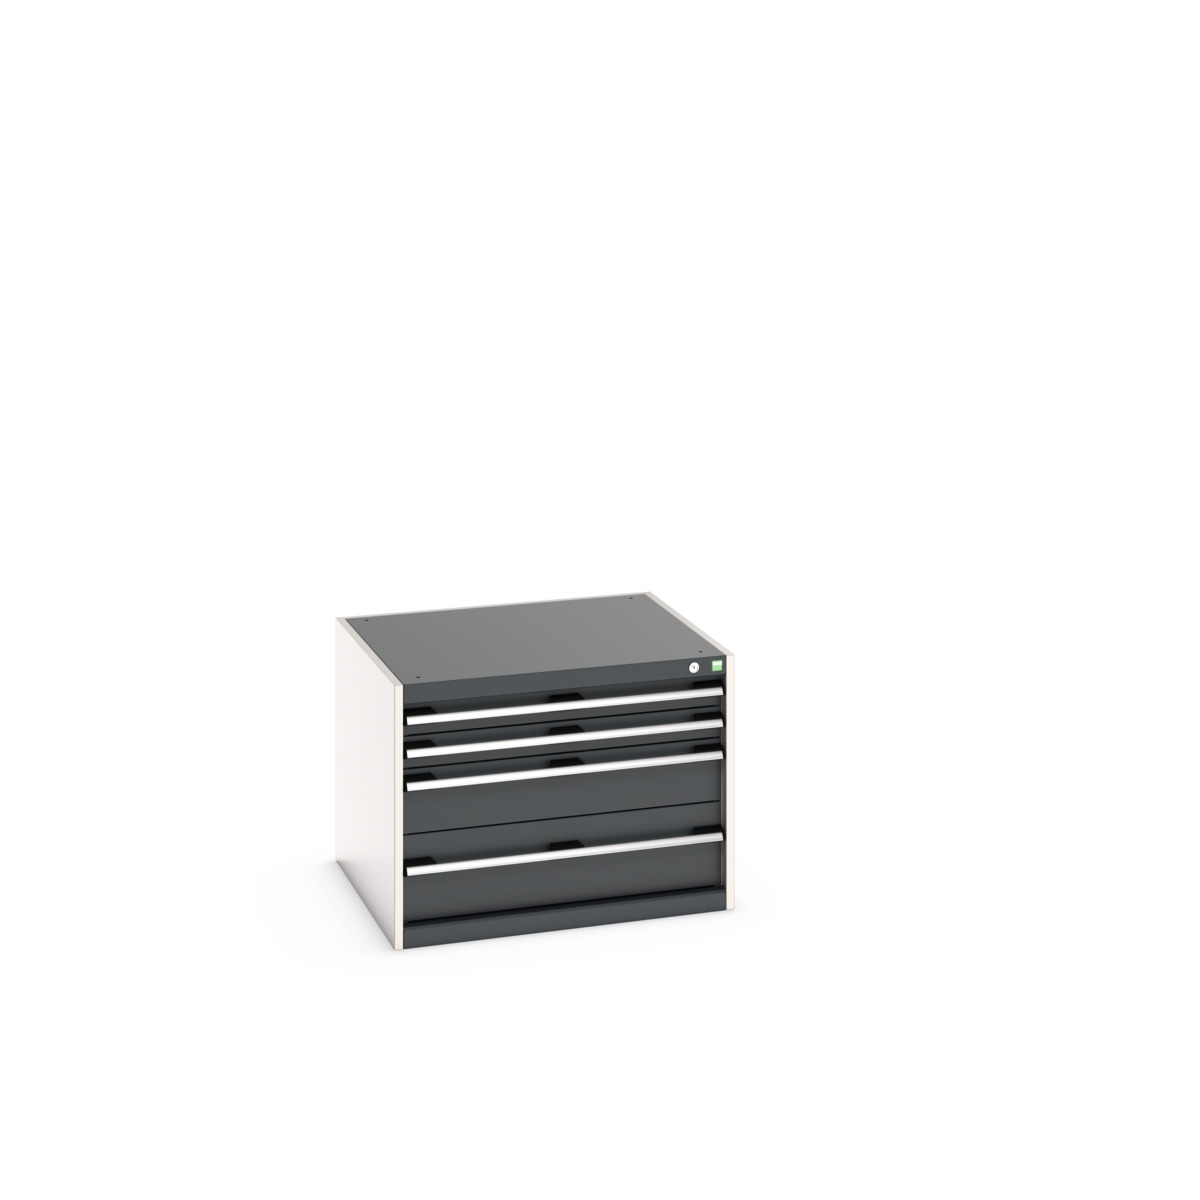 40028091. - cubio drawer cabinet